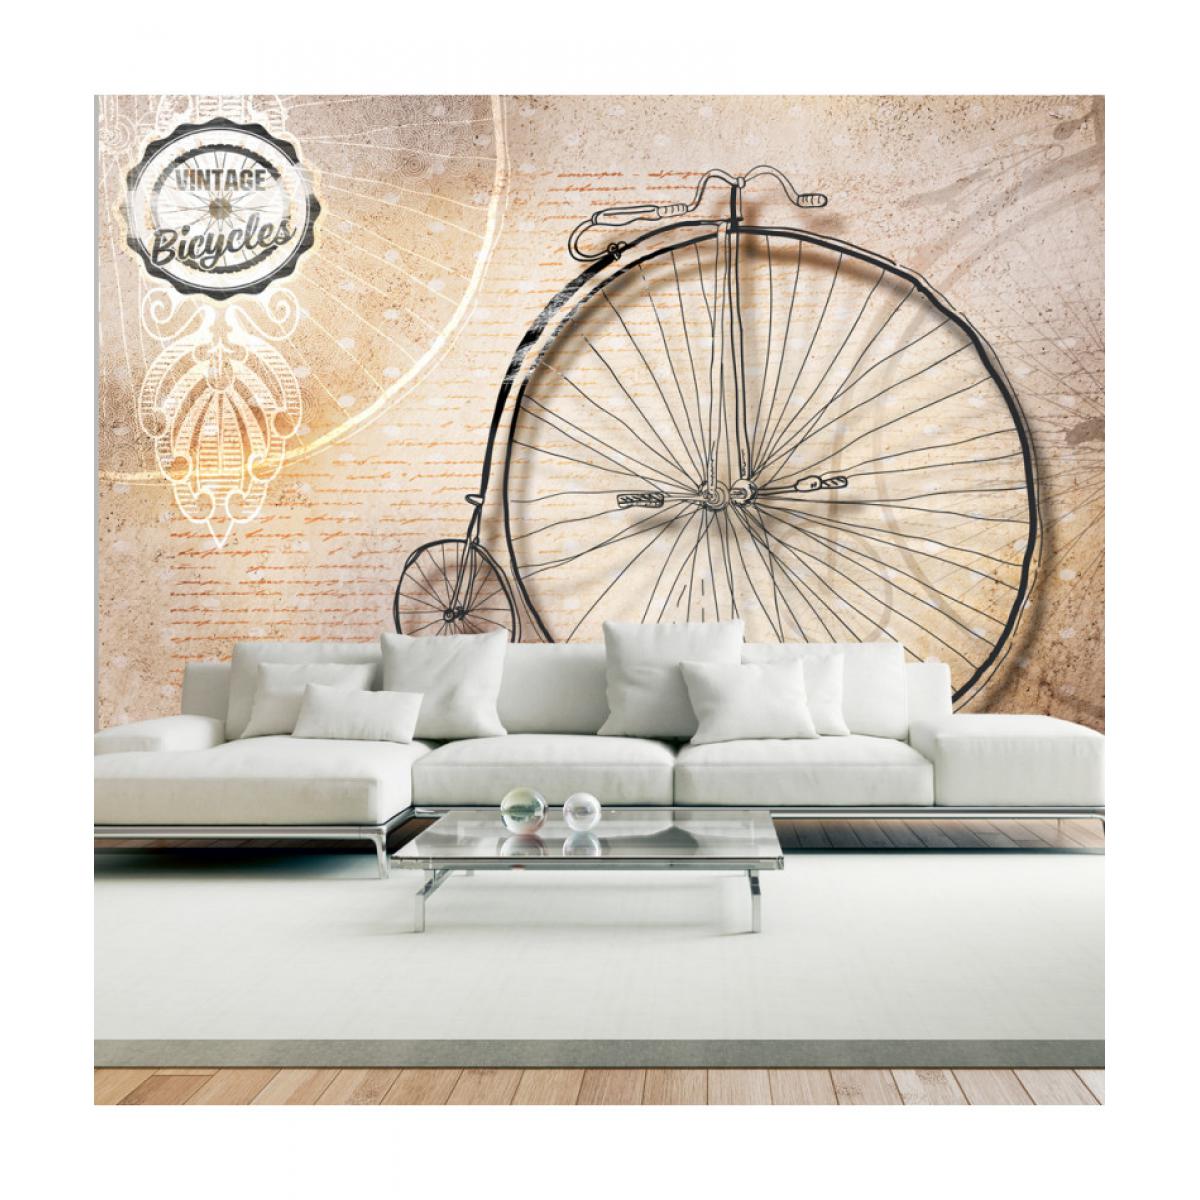 Artgeist - Papier peint - Vintage bicycles - sepia 100x70 - Papier peint